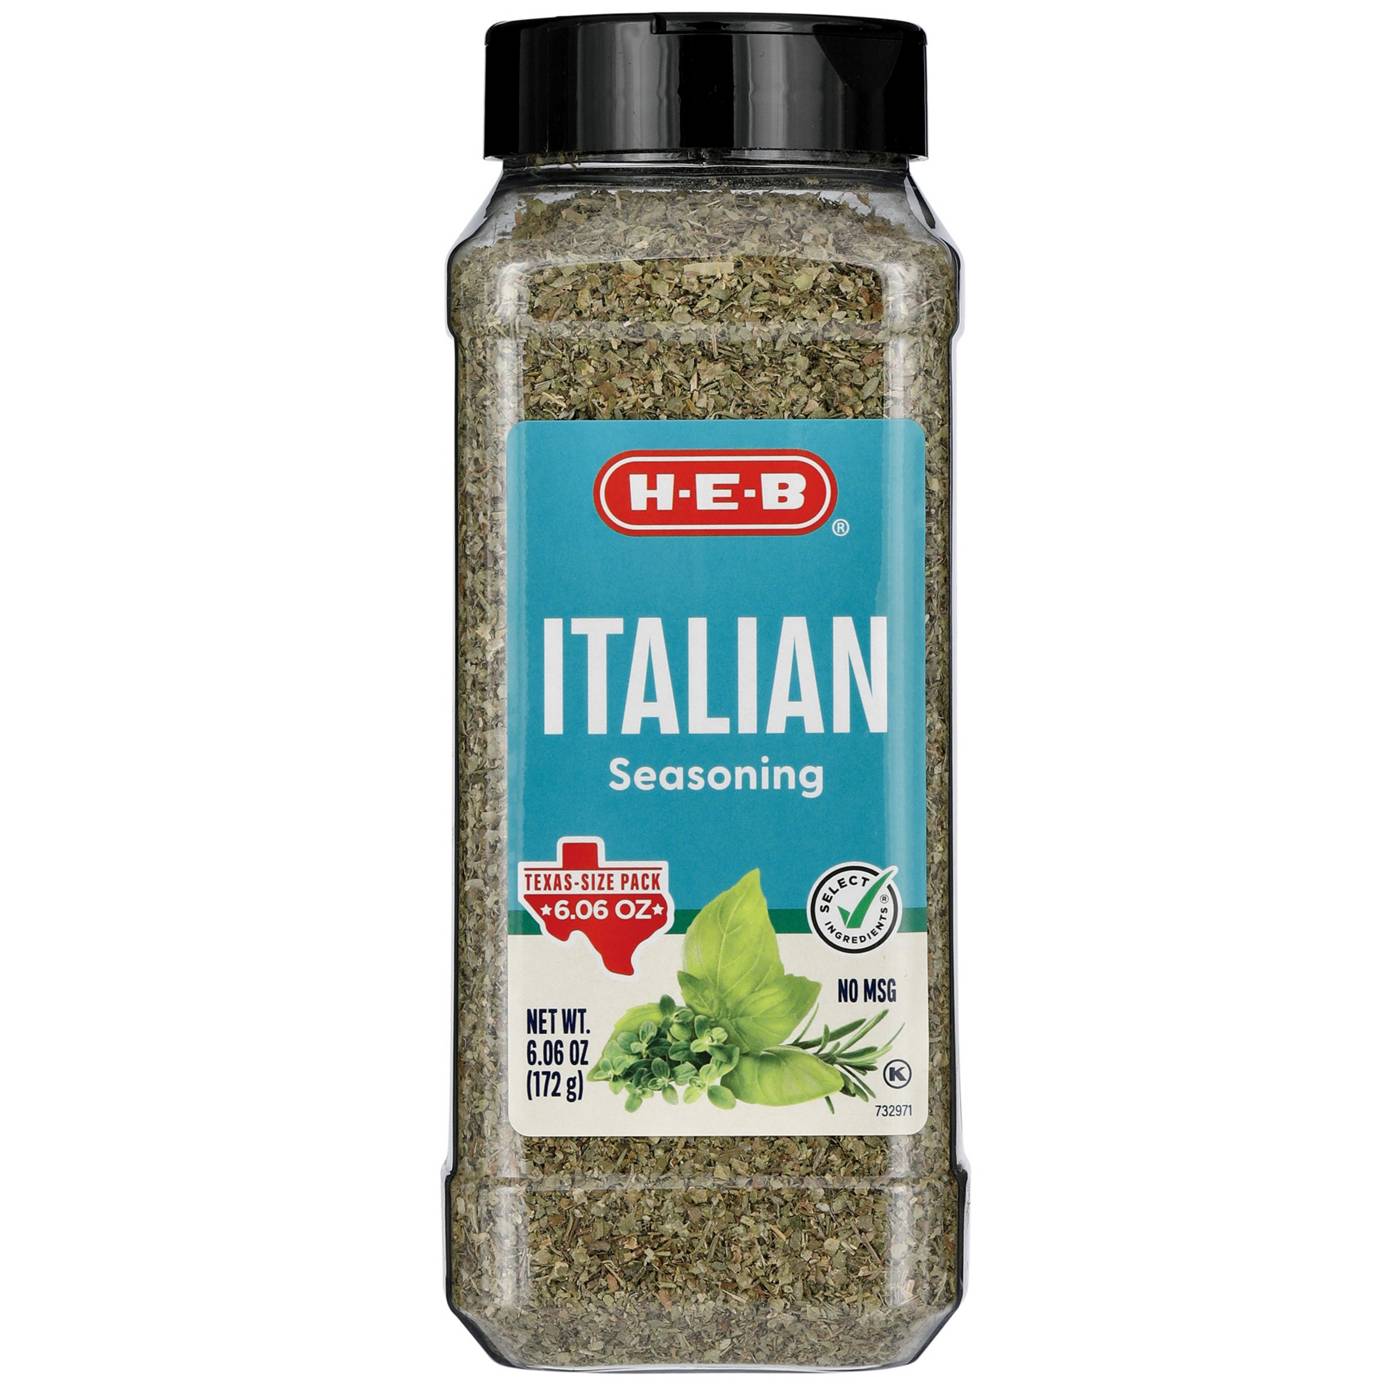 H-E-B Italian Seasoning – Texas-Size Pack; image 1 of 2